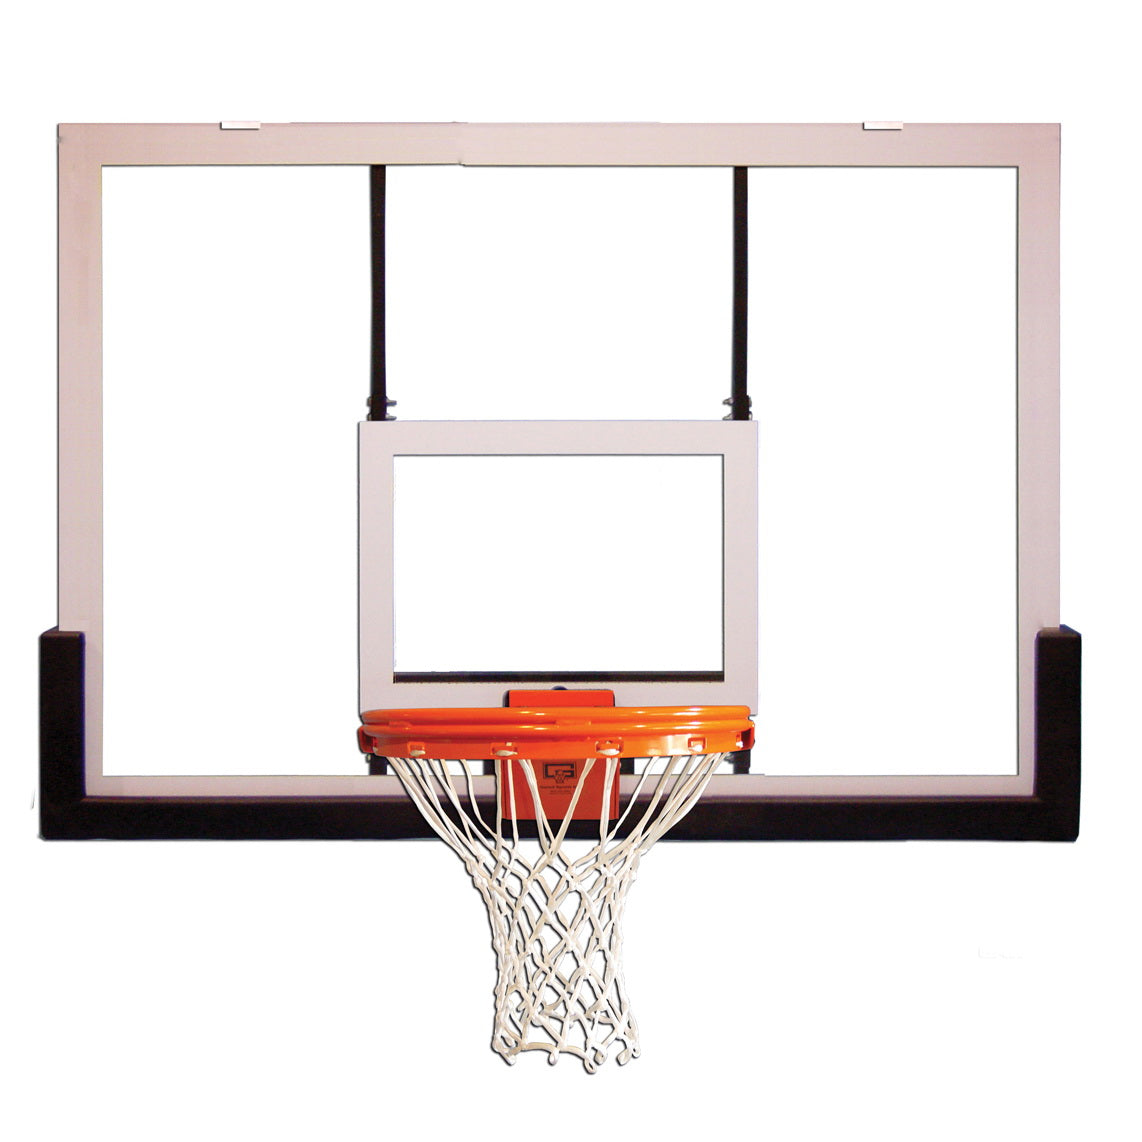 Gared Outdoor Recreational Glass Basketball Backboard